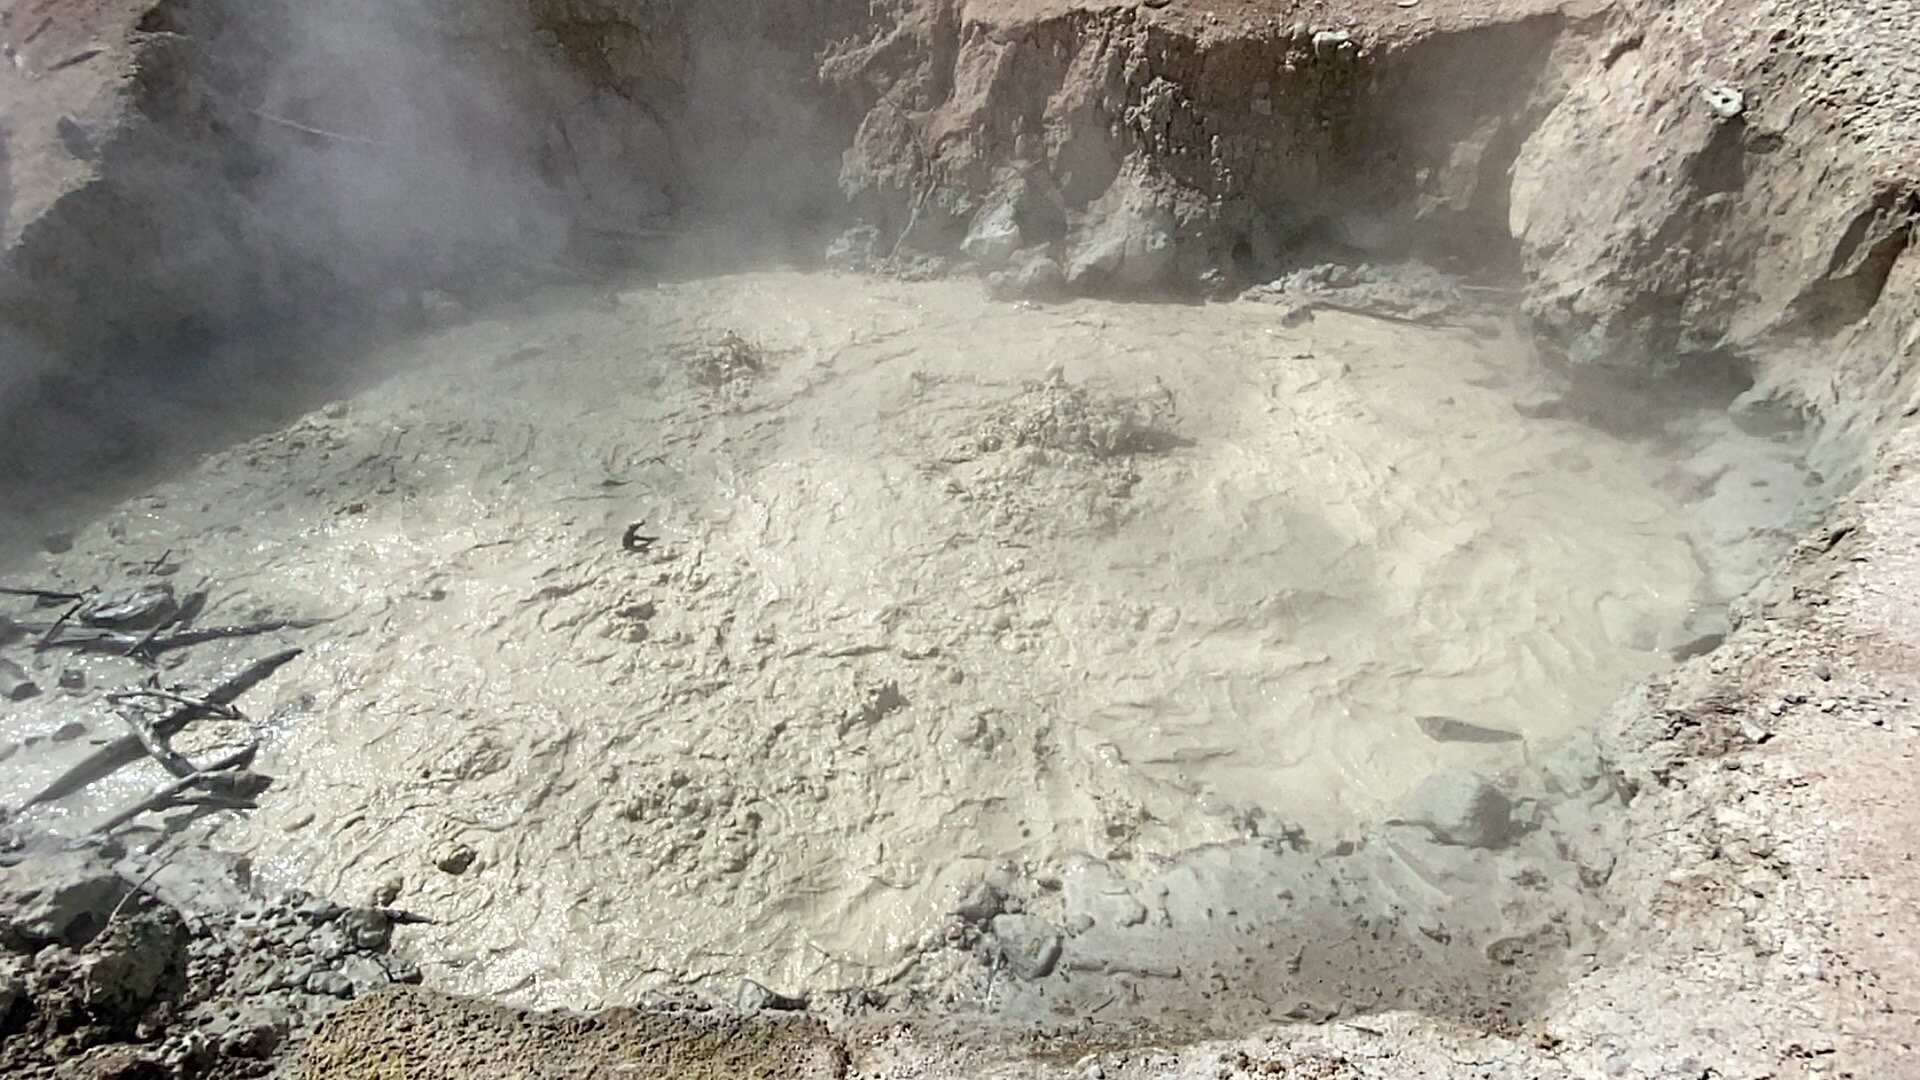 Boiling mudpots at Sulphur Works thermal area of Lassen Volcanic.  Photo by Karen Boudreaux, June 8, 2021